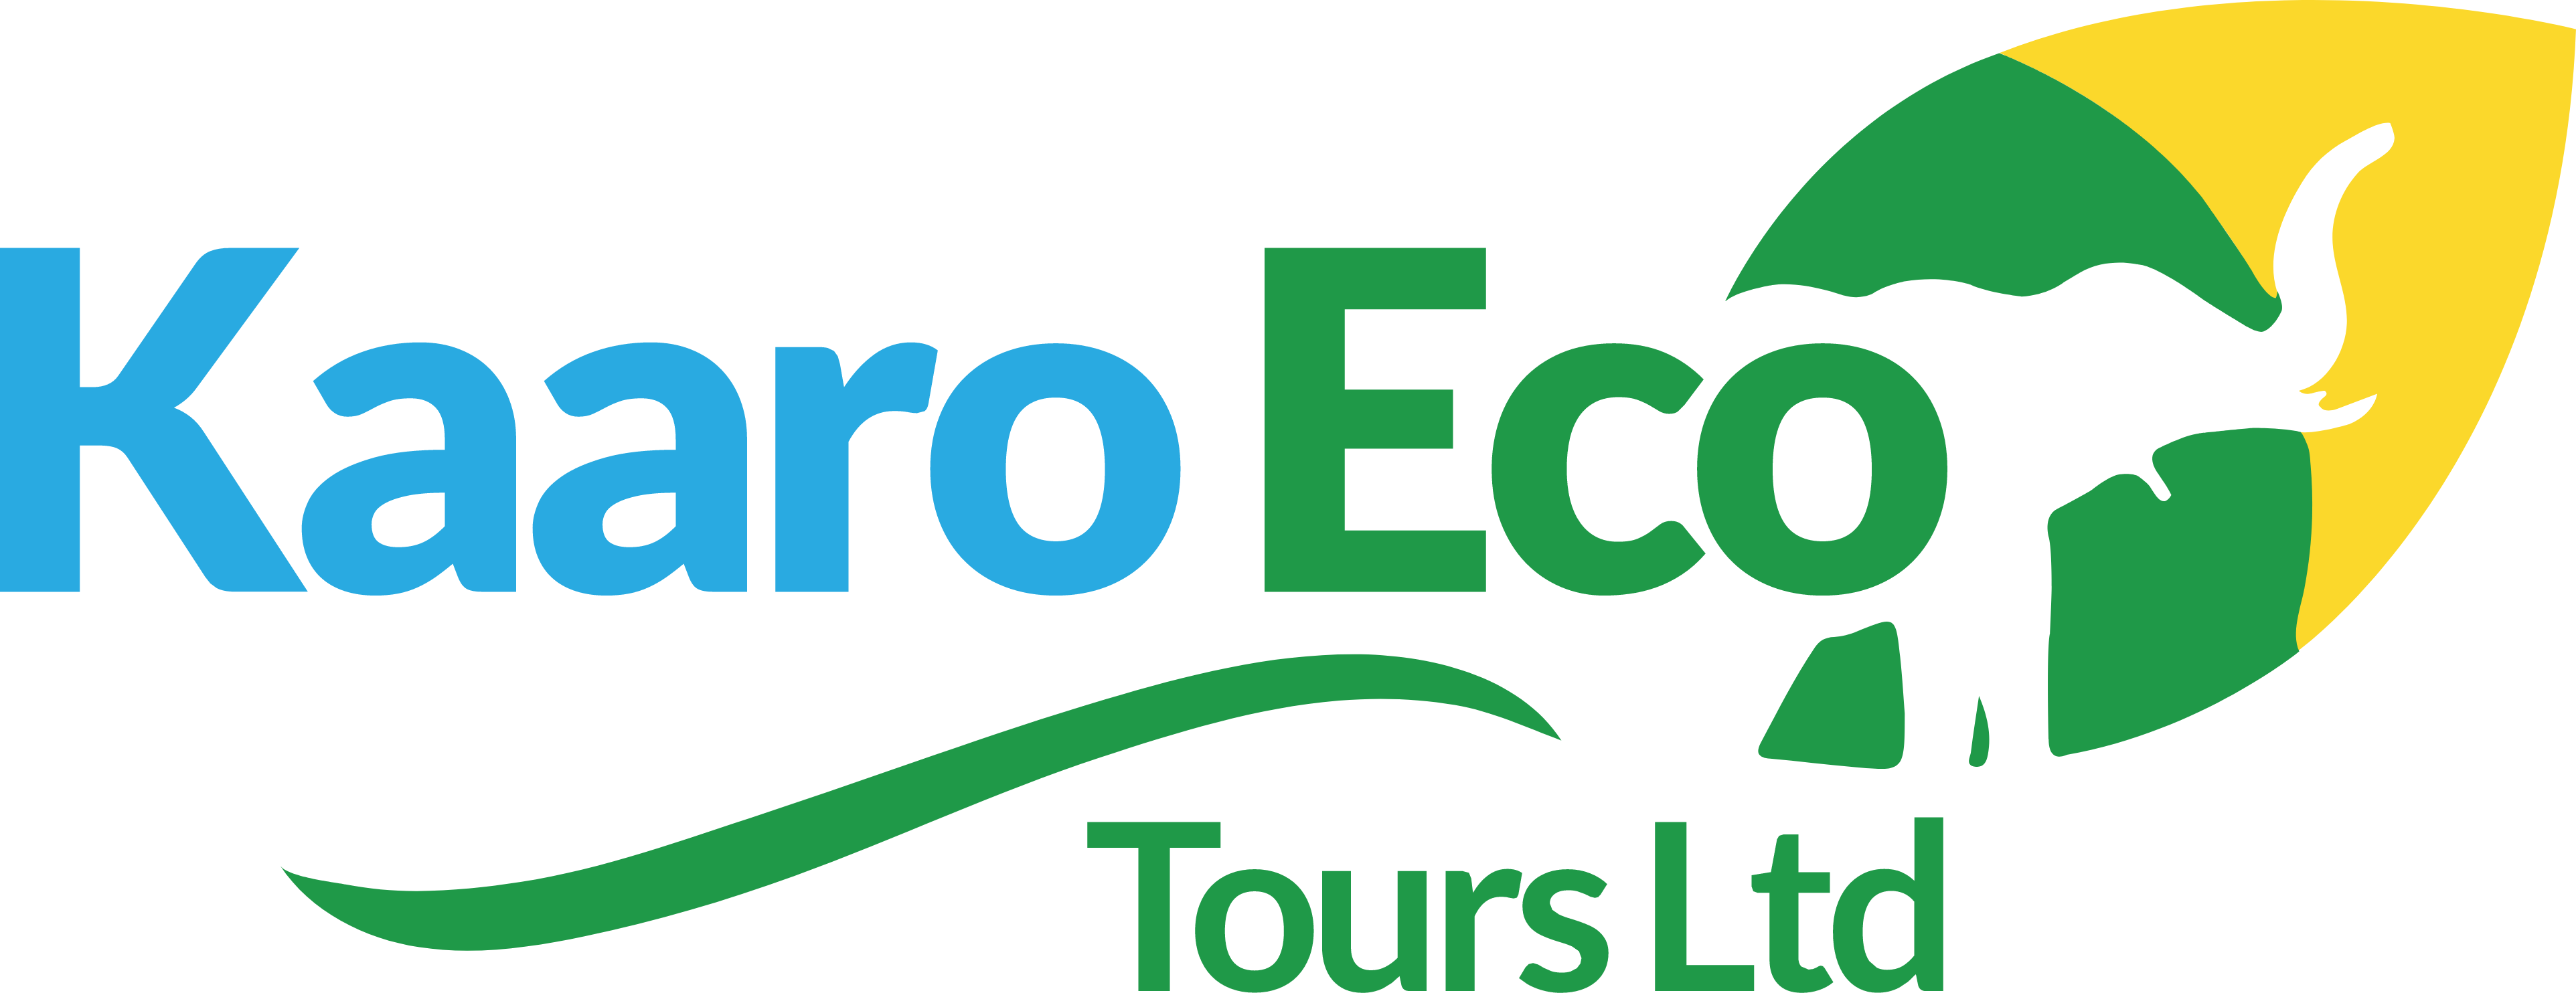 Kaaro Eco Tours